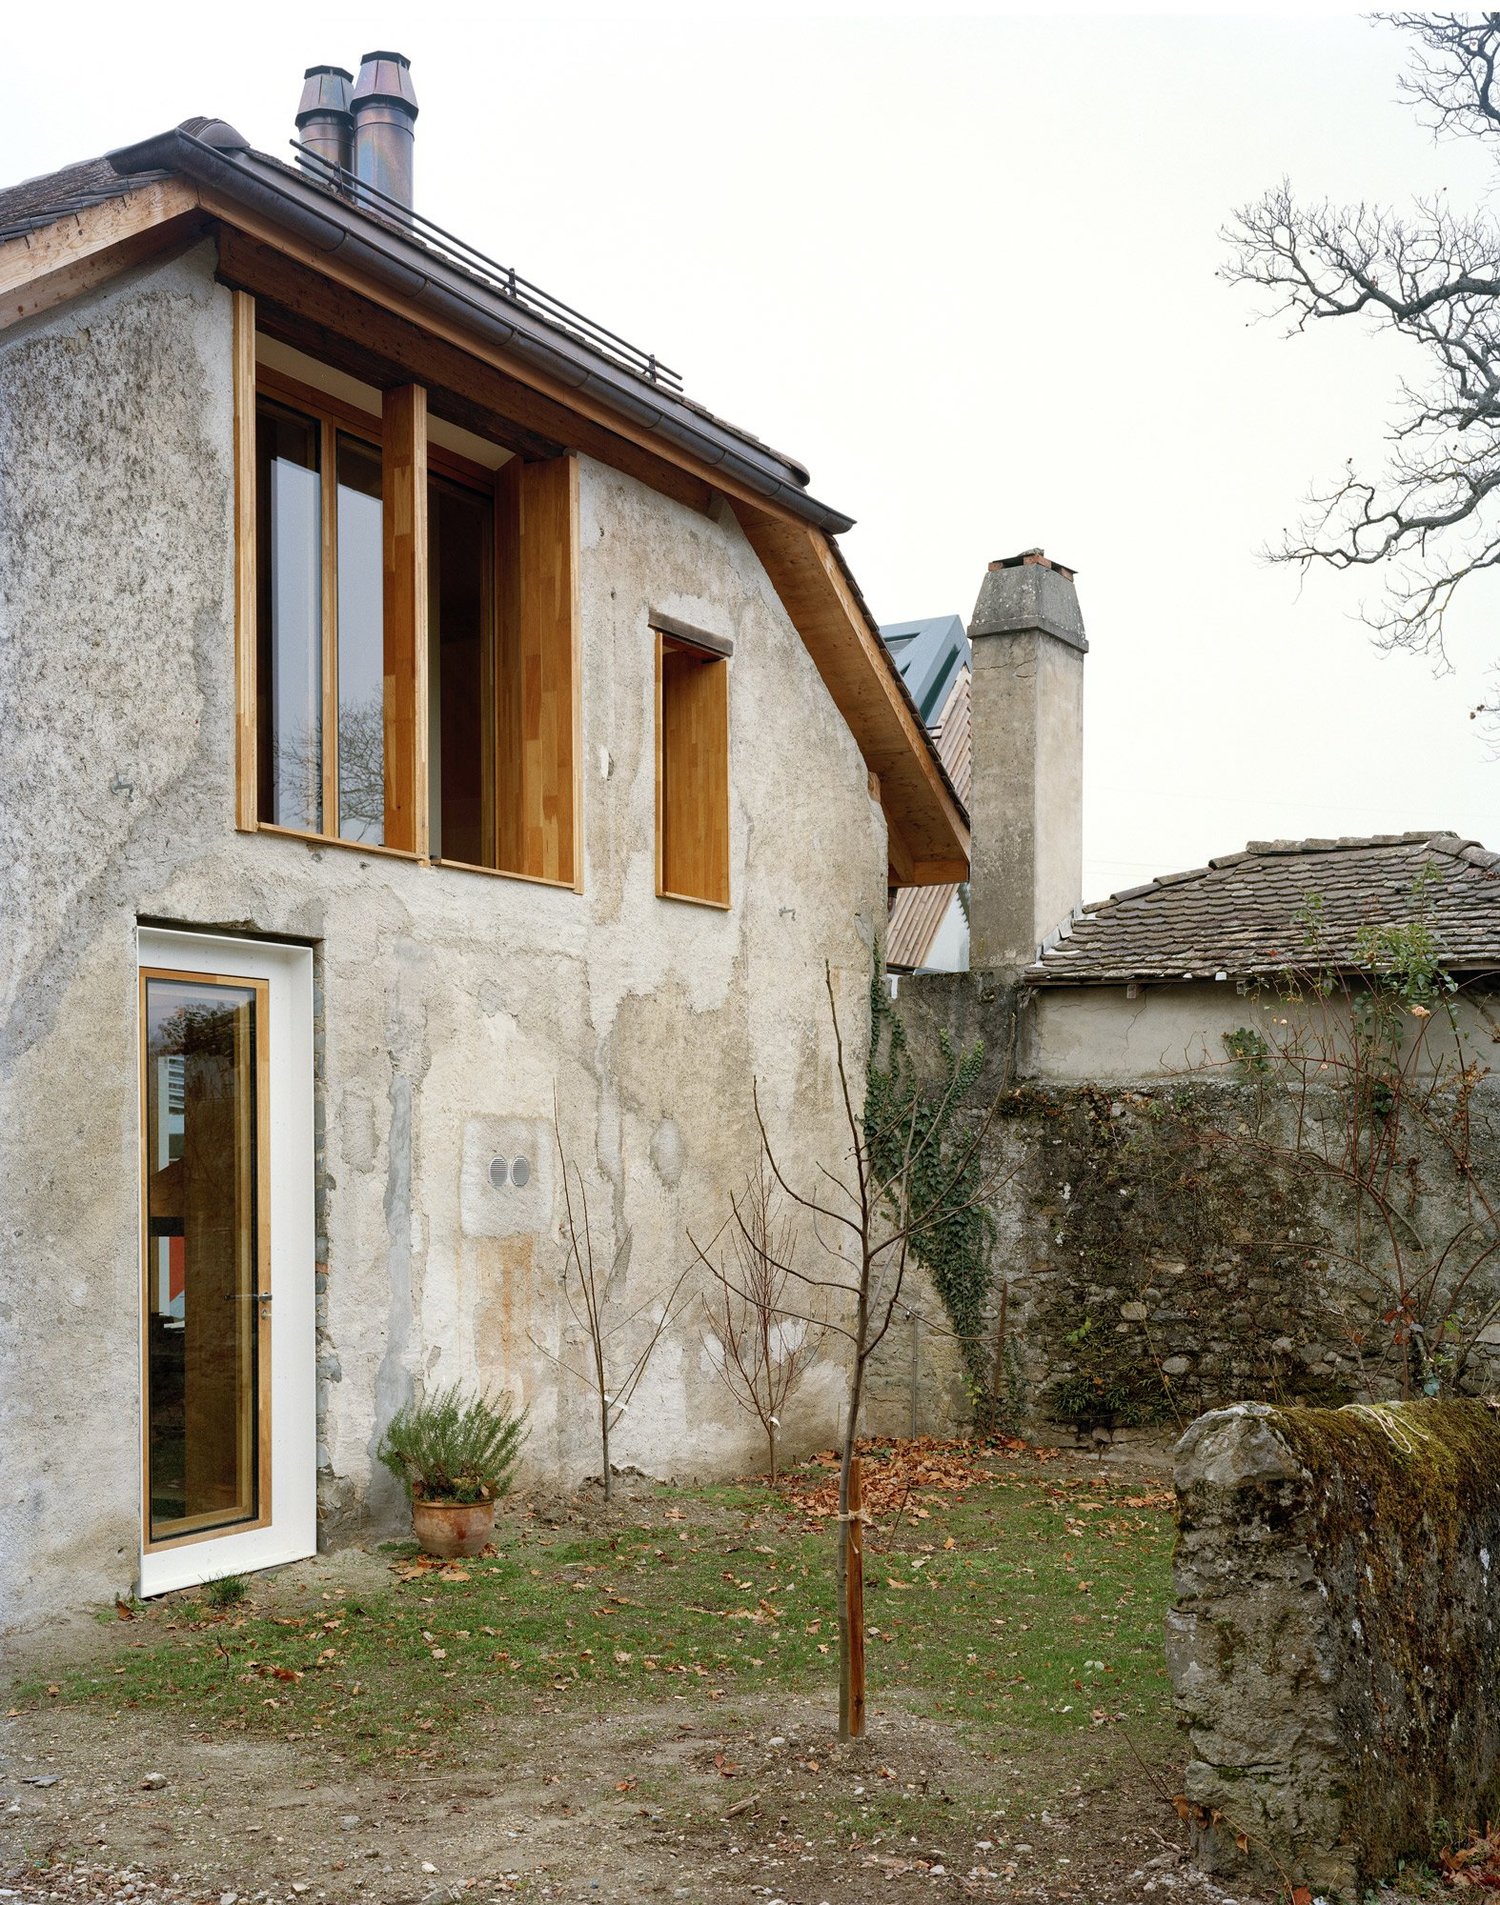 2 Houses in Chigny | © Joël Tettamanti